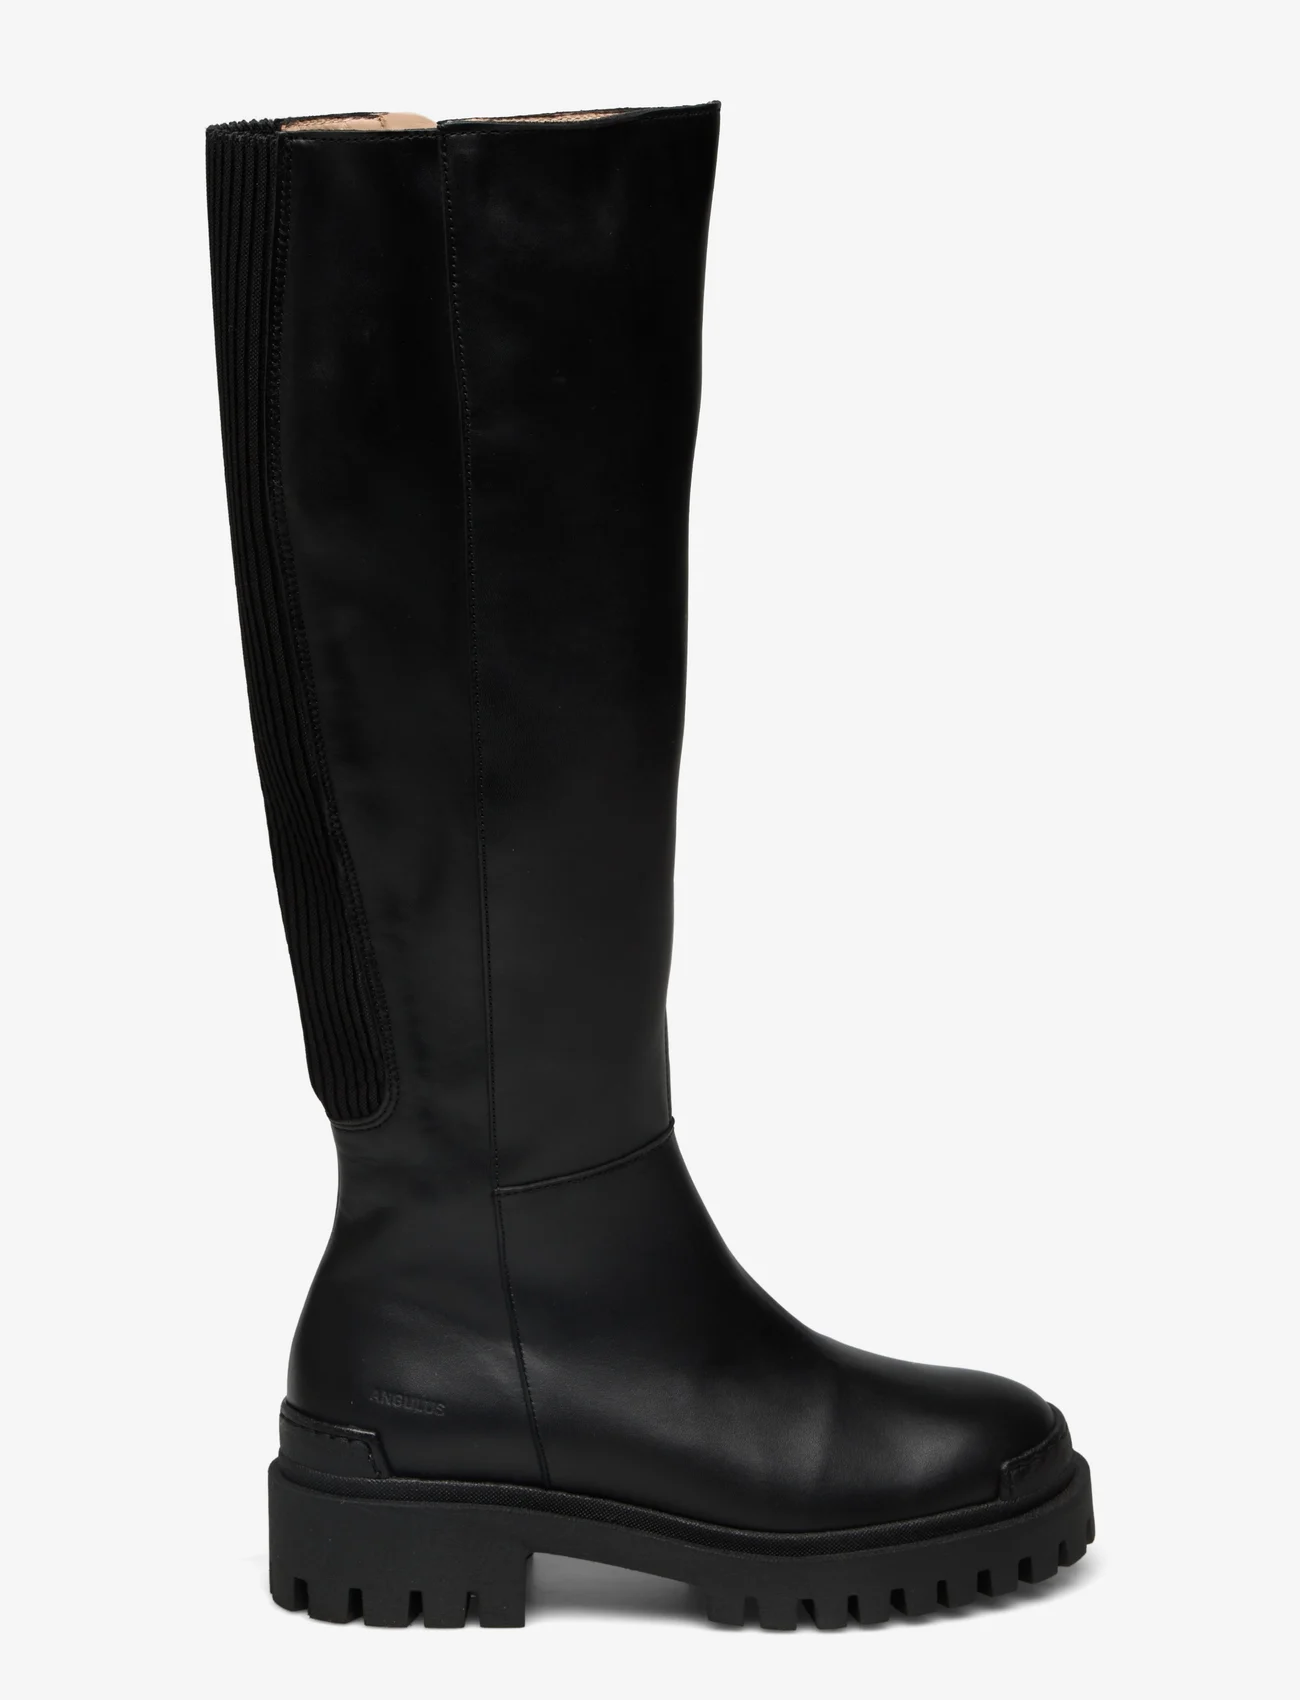 ANGULUS - Boots - flat - knee high boots - 1604/019 black/black - 1